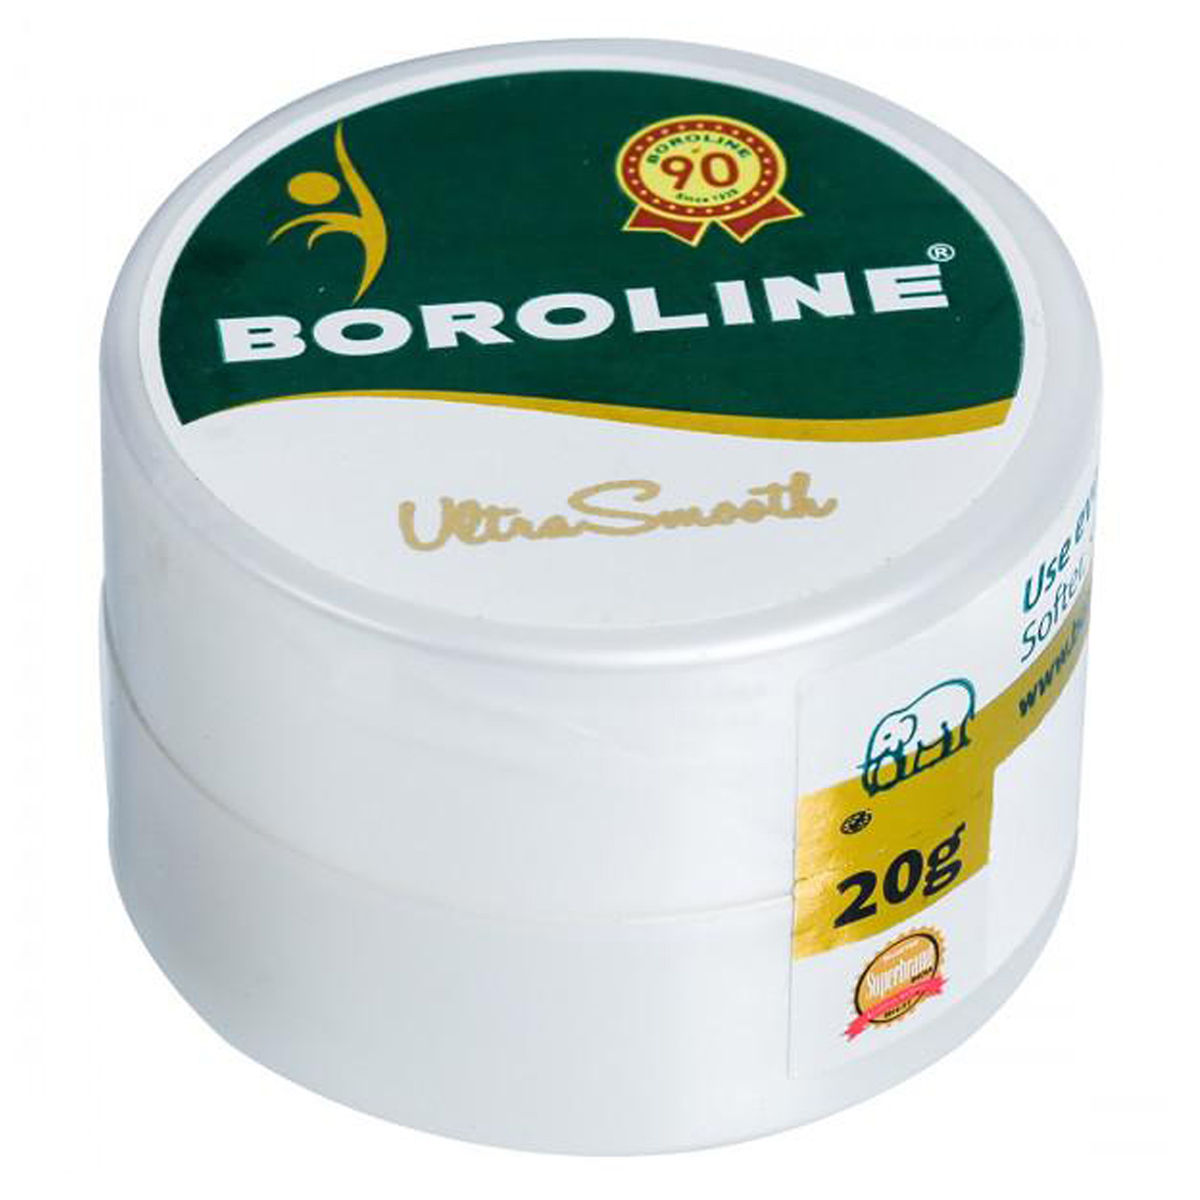 Boroline Cream, 40 gm Price, Uses, Side Effects, Composition - Apollo  Pharmacy